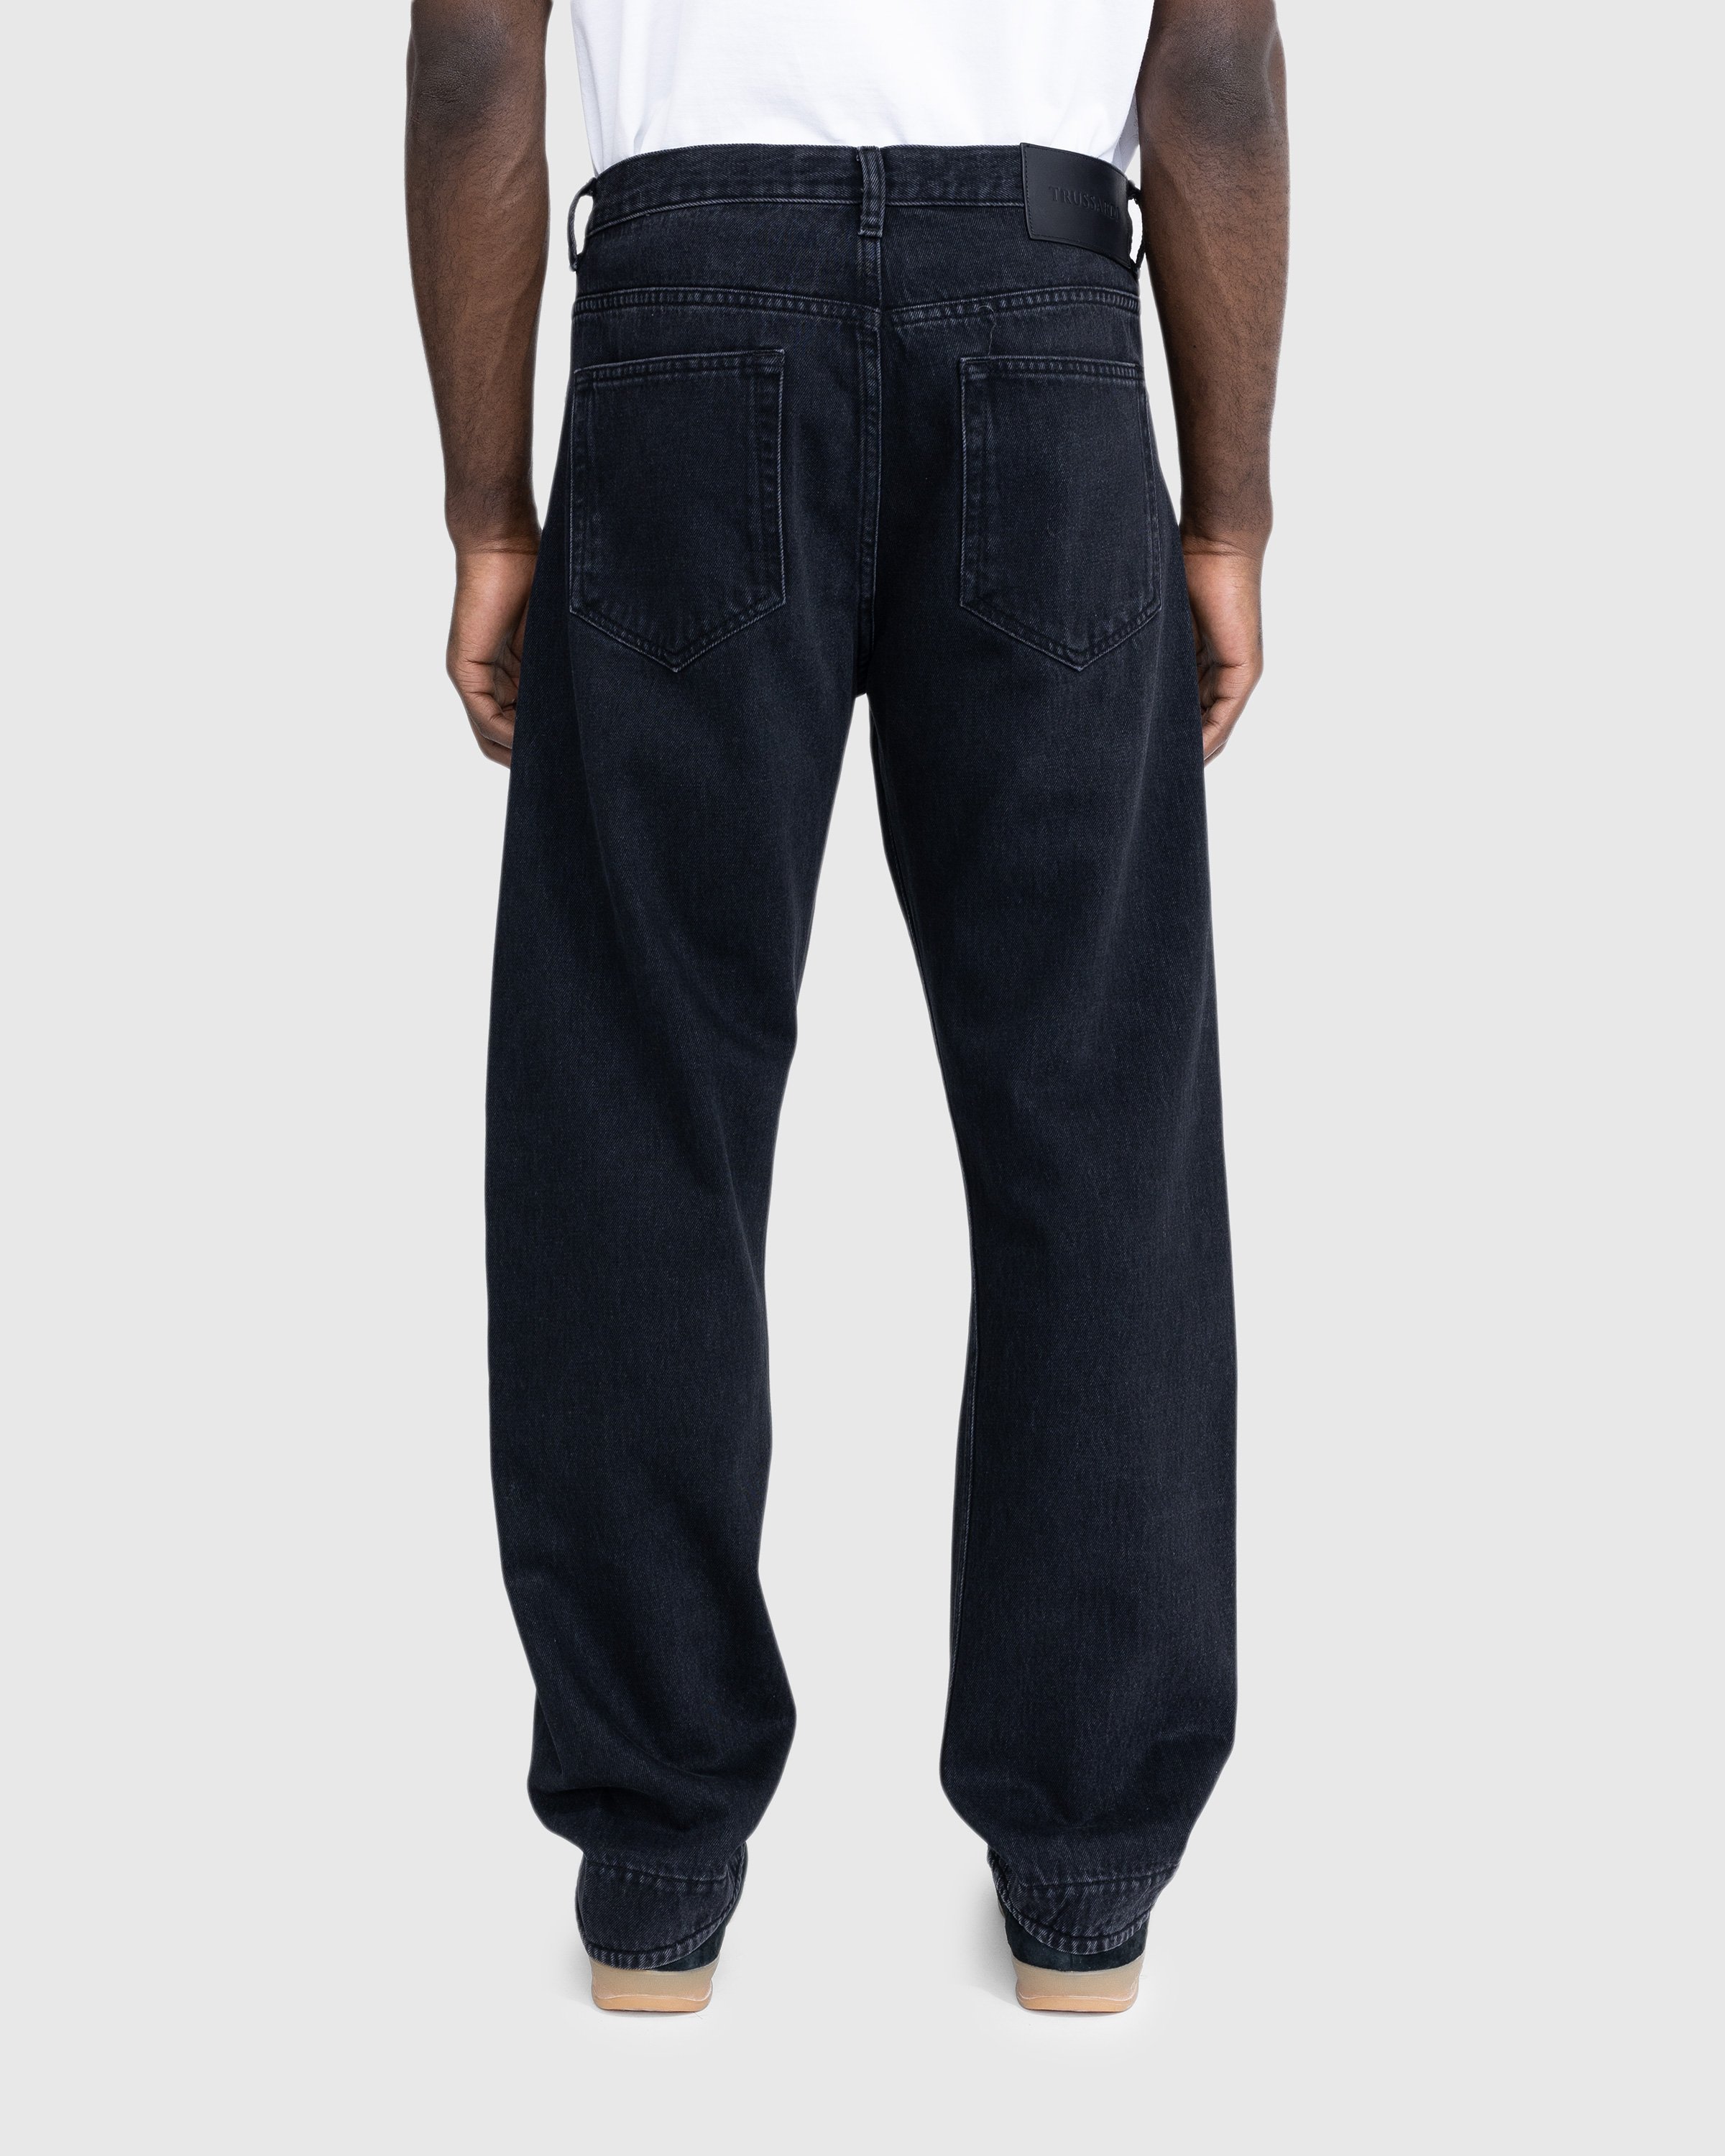 Trussardi - Five-Pocket Twisted Tapered Jeans Black Rigid - Clothing - Black - Image 3